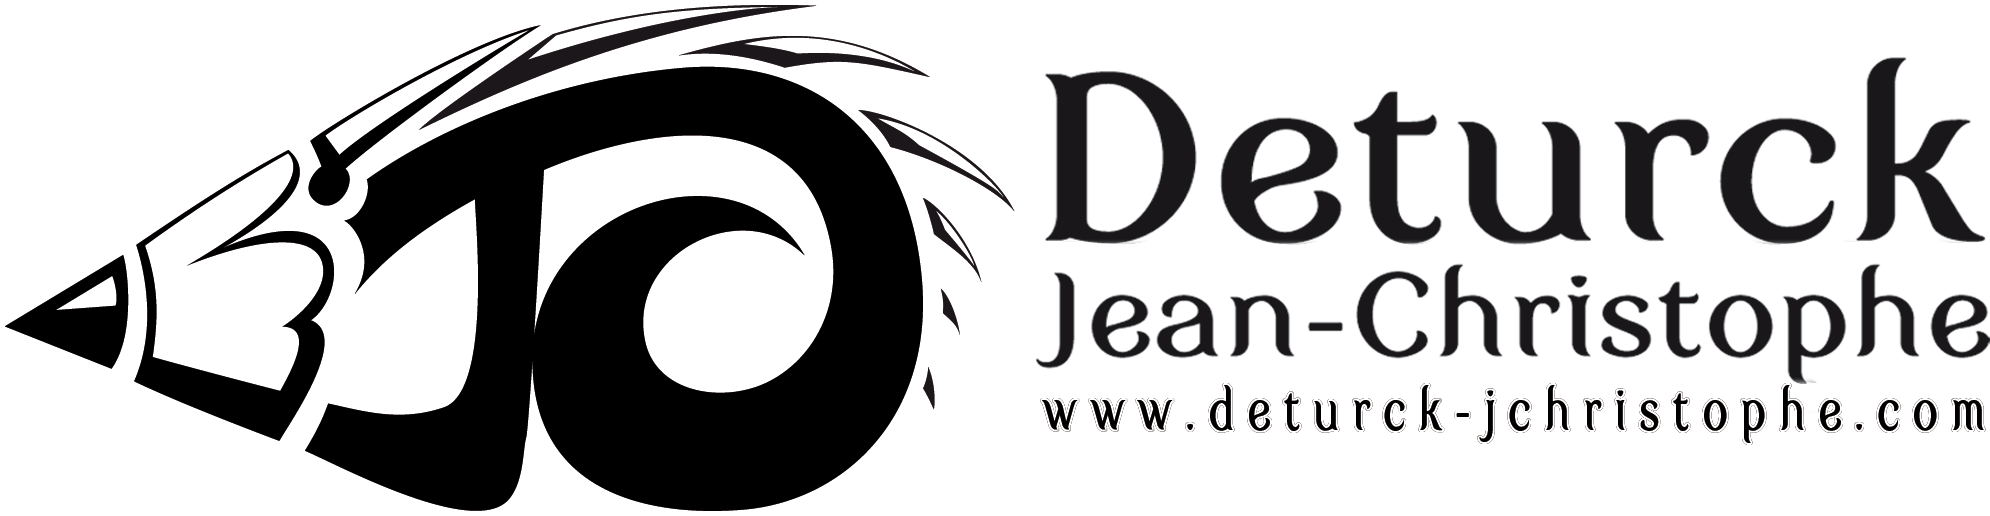 deturck jean-christophe